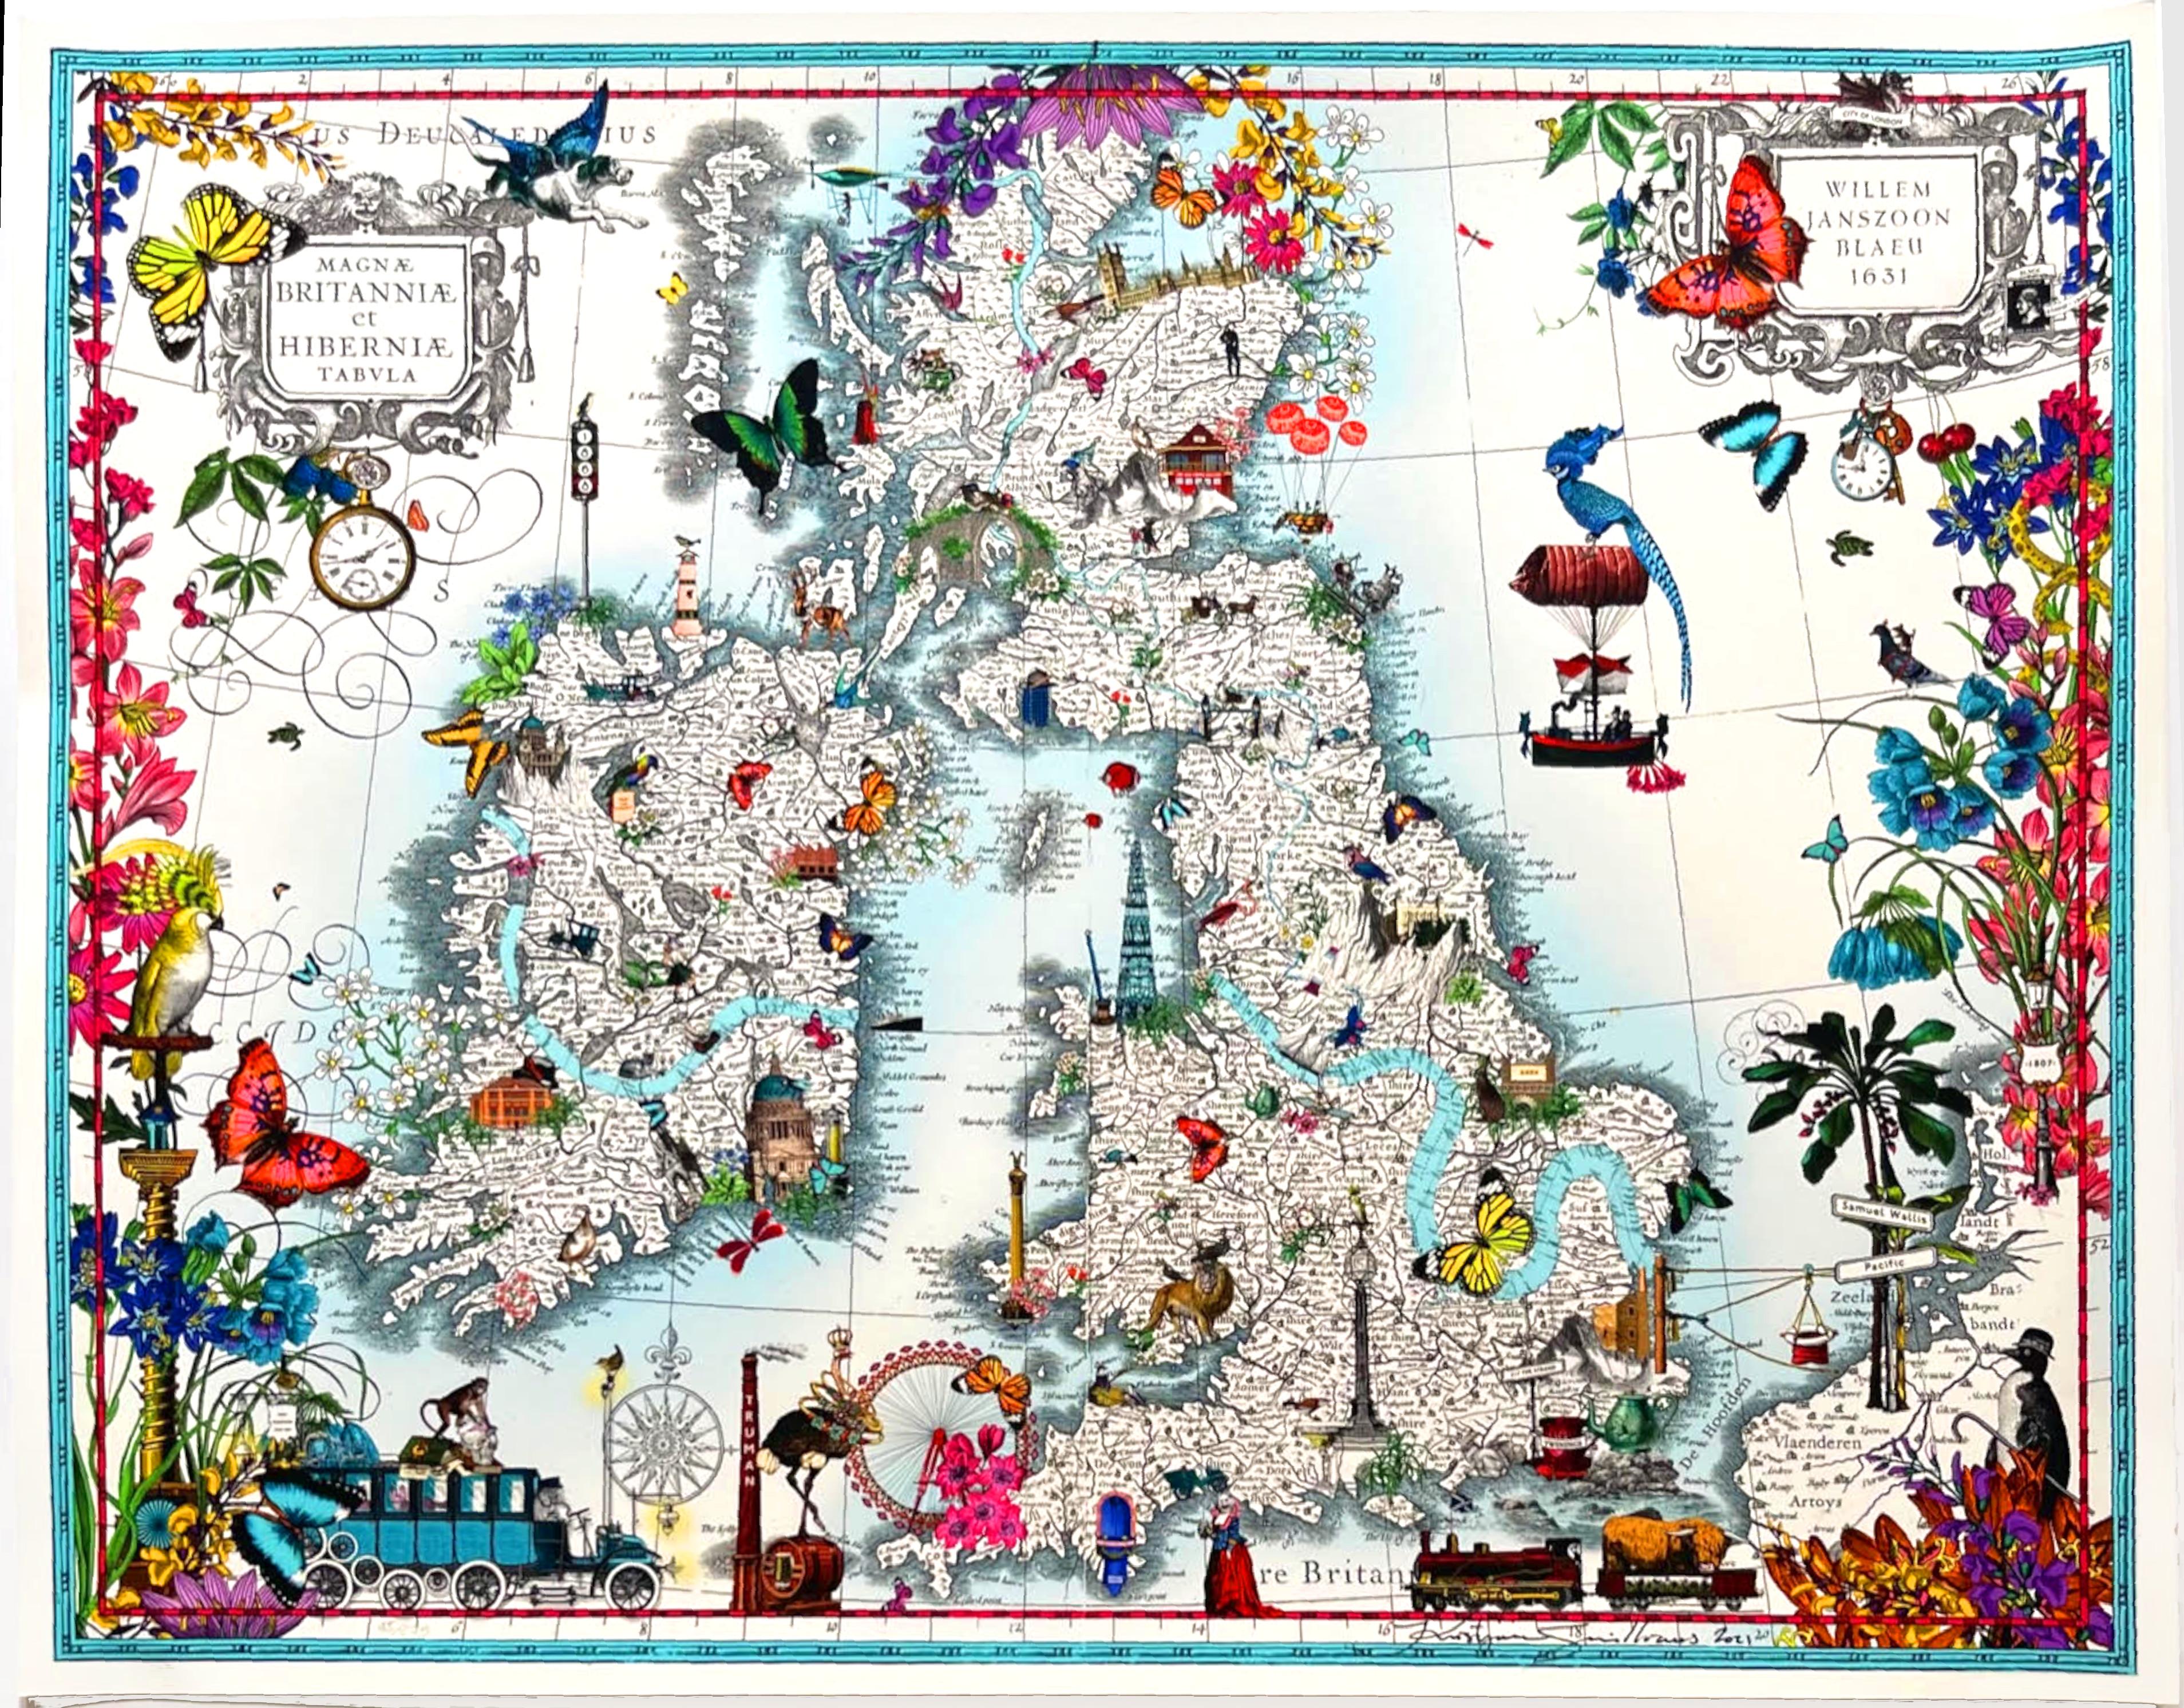 Abstract Print Kristjana Williams - Taera Videre - Blaeu British Isles